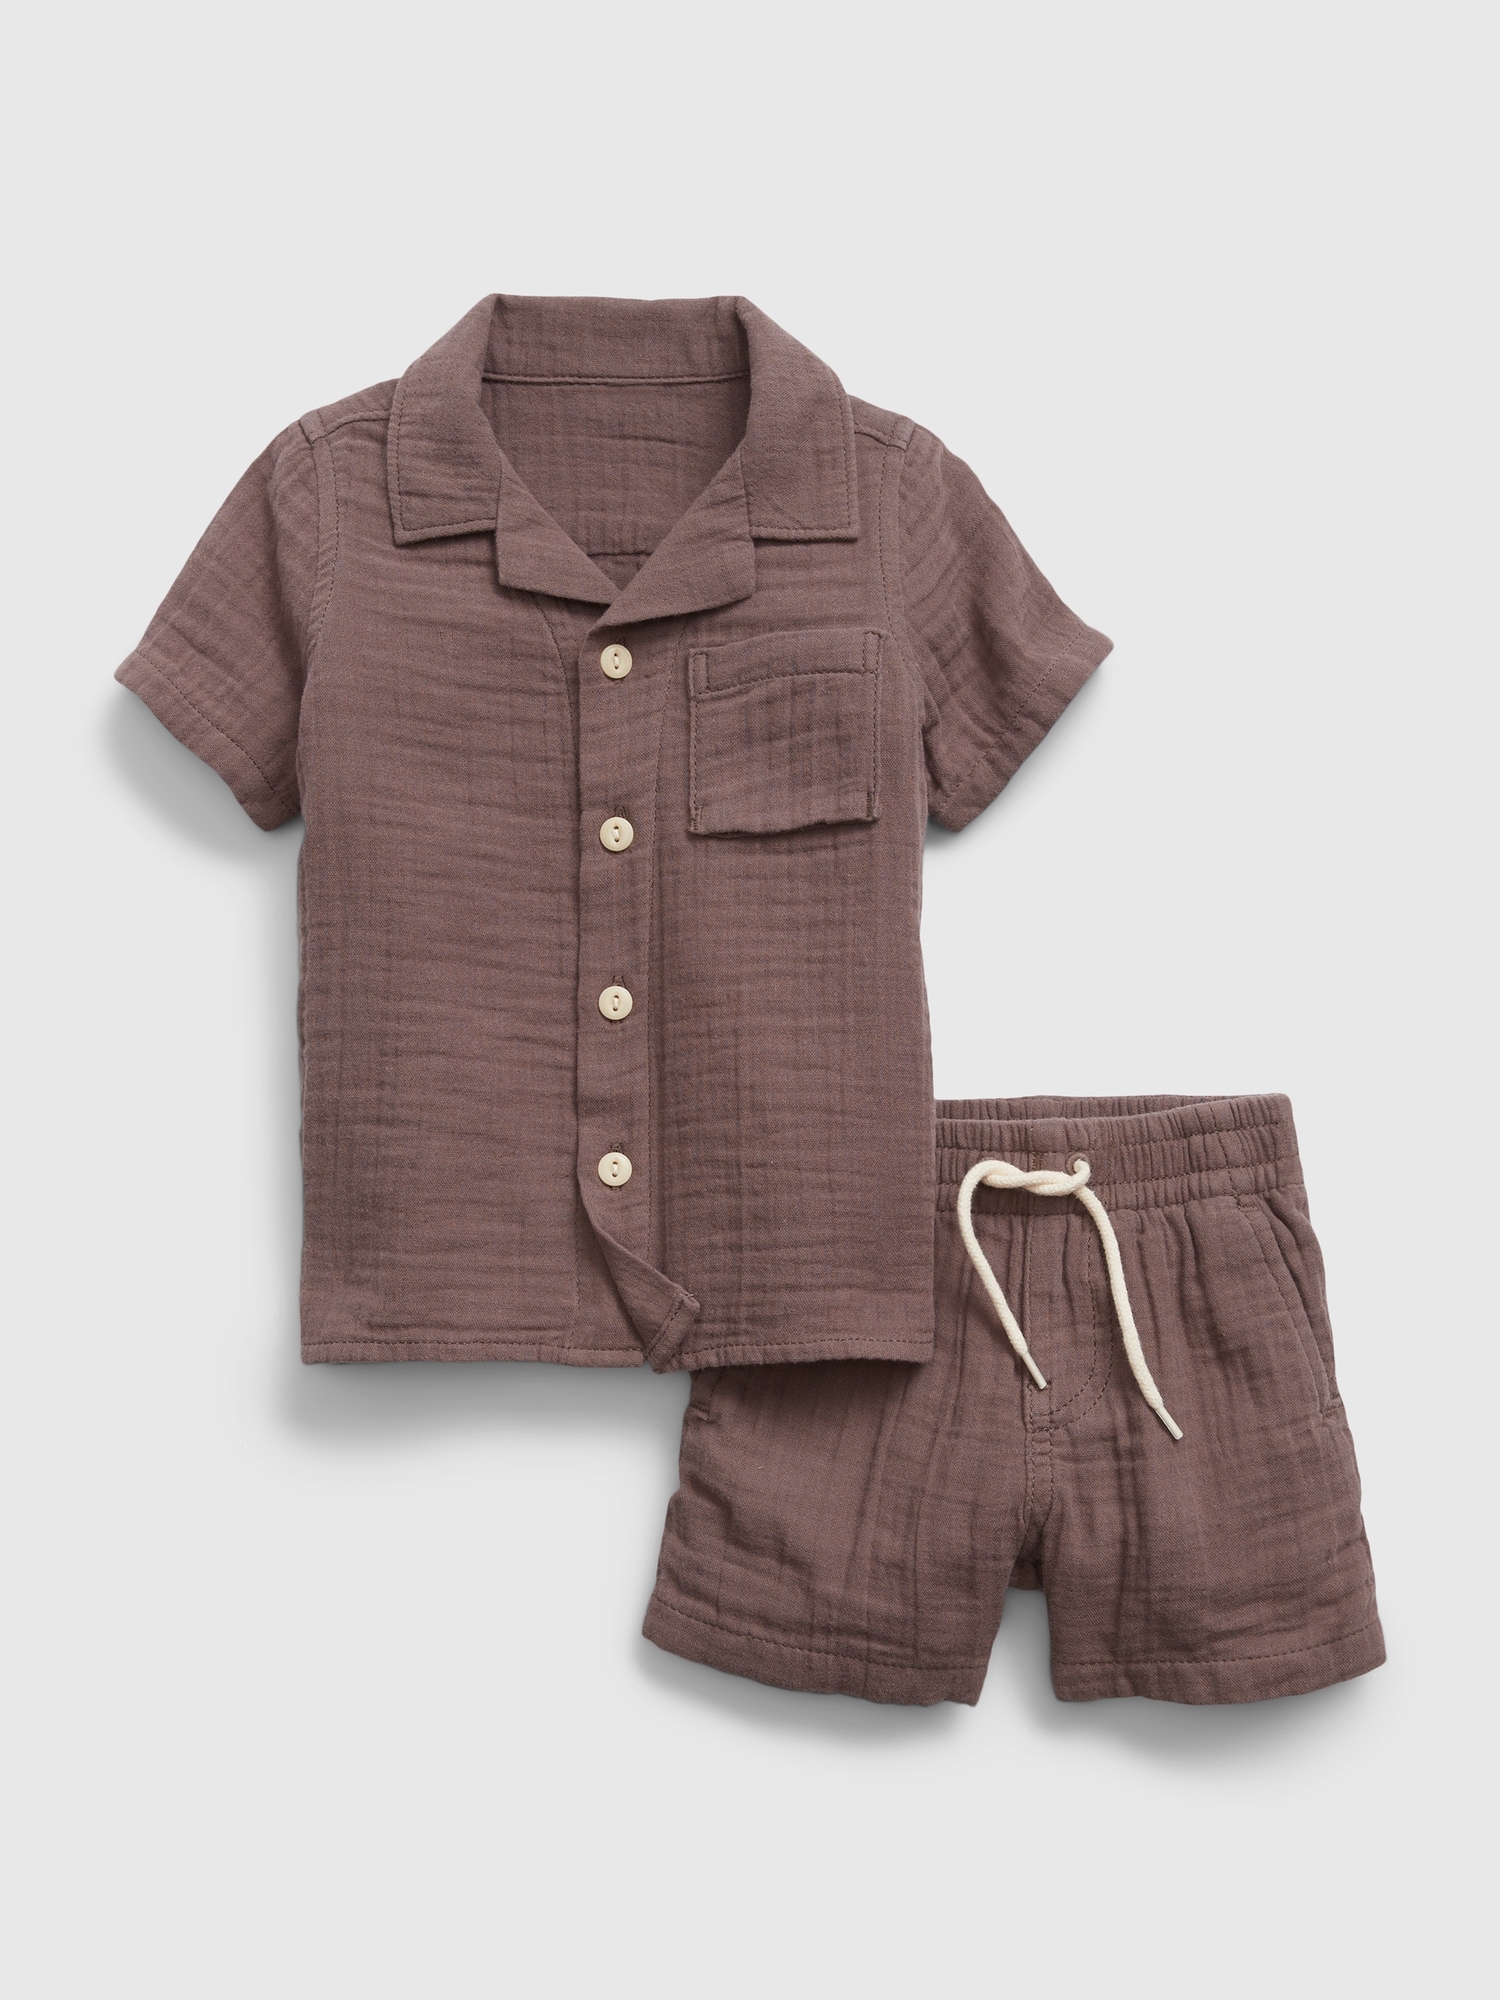 Gap Baby Crinkle Gauze Outfit Set brown. 1